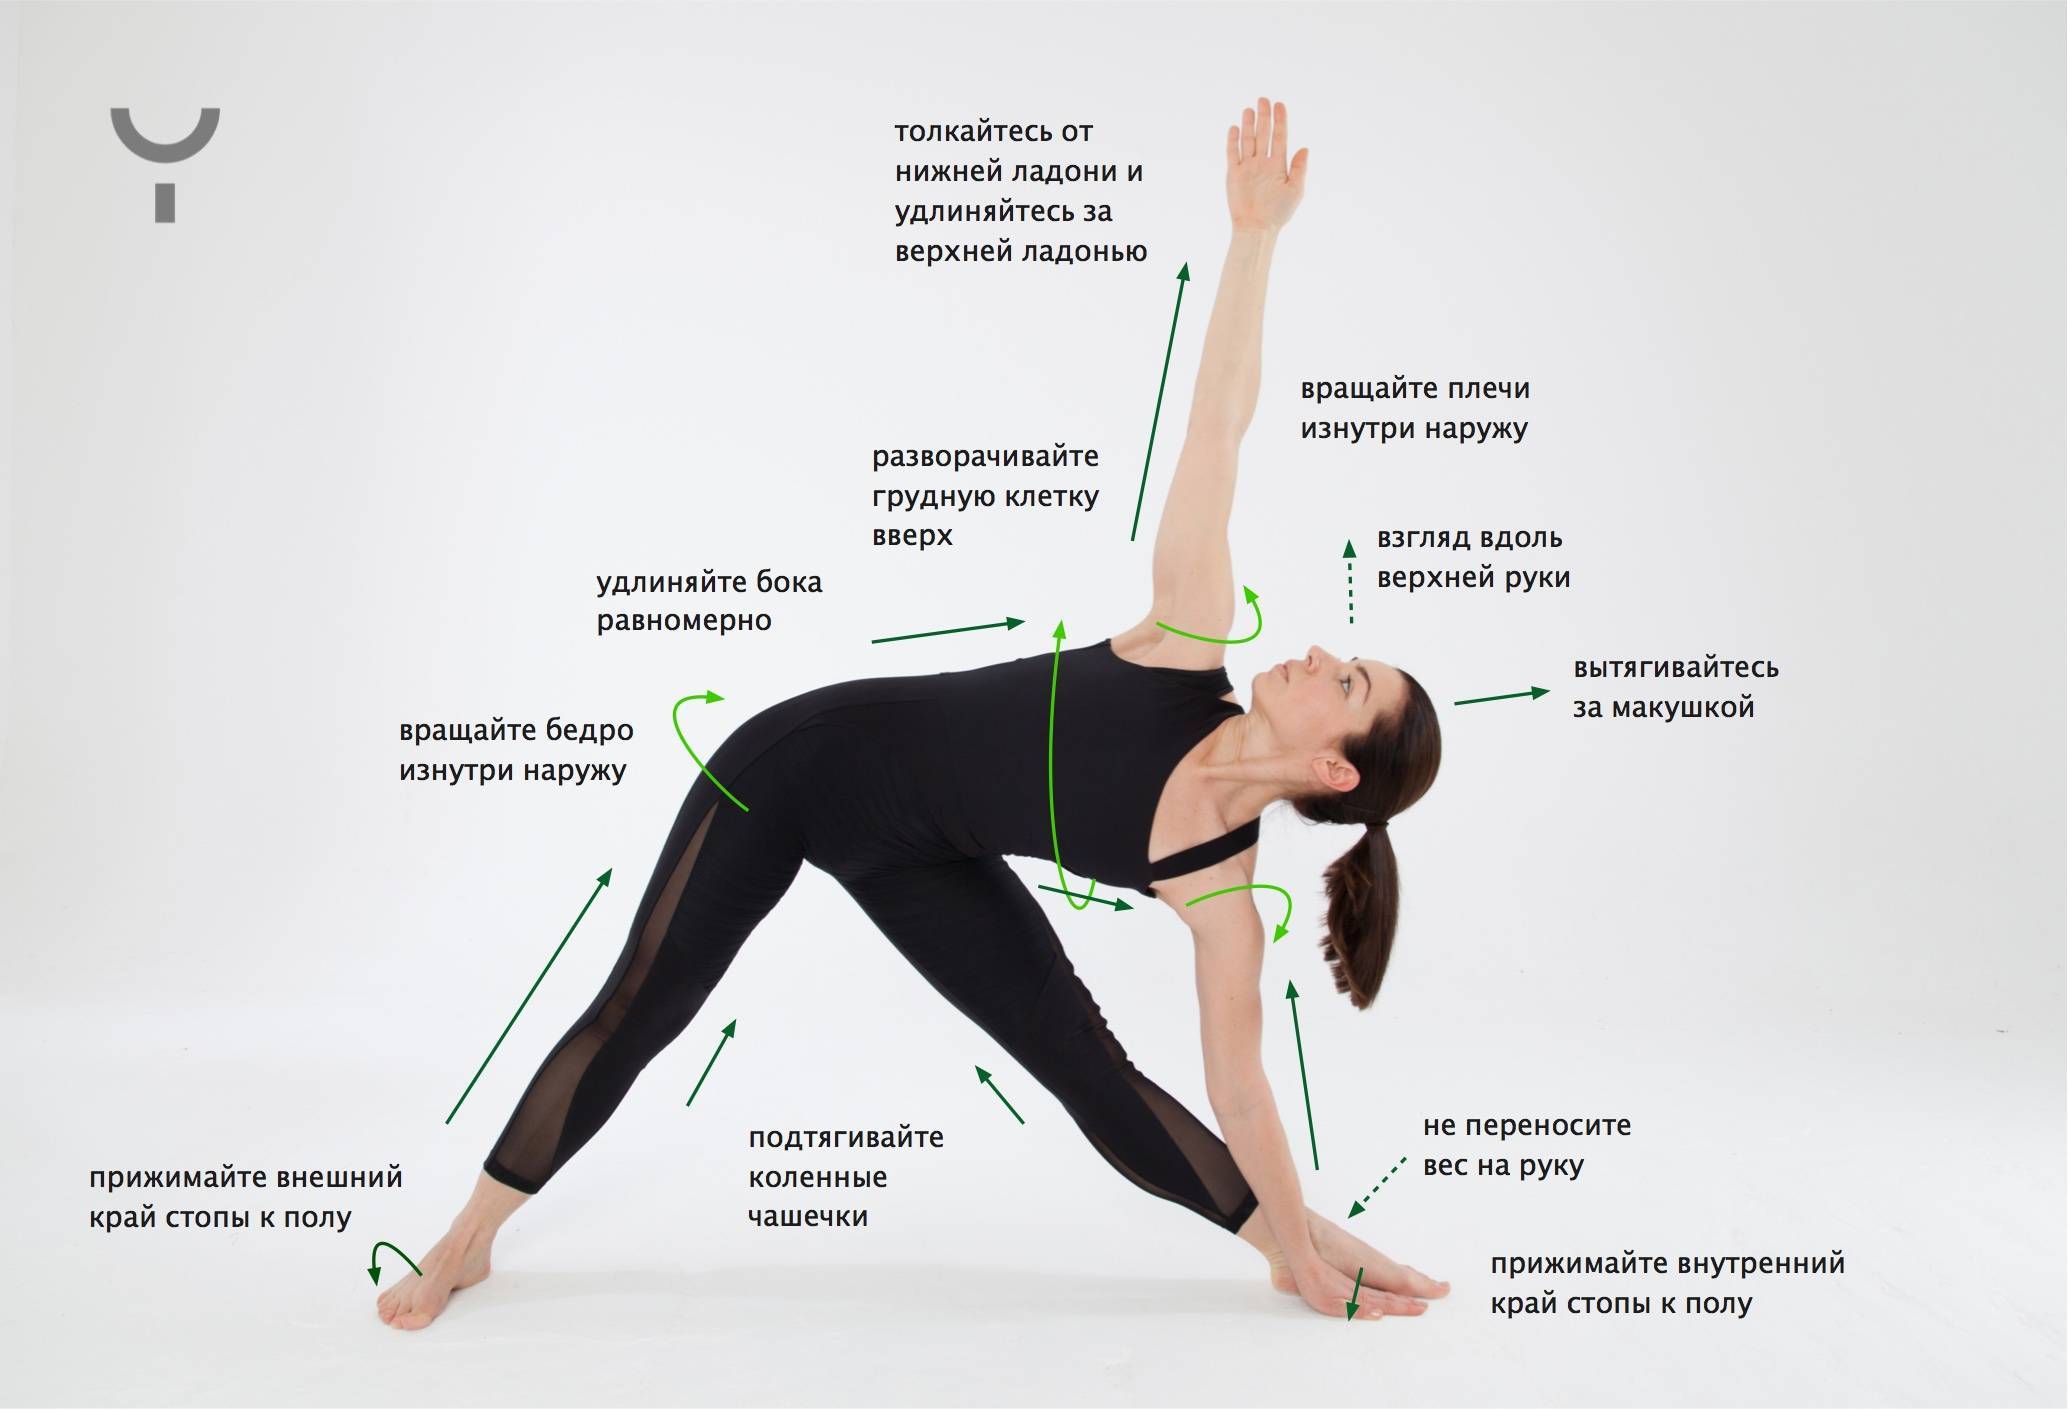 Паривритта паршваконасана в йоге: техника выполнения, польза, противопоказания